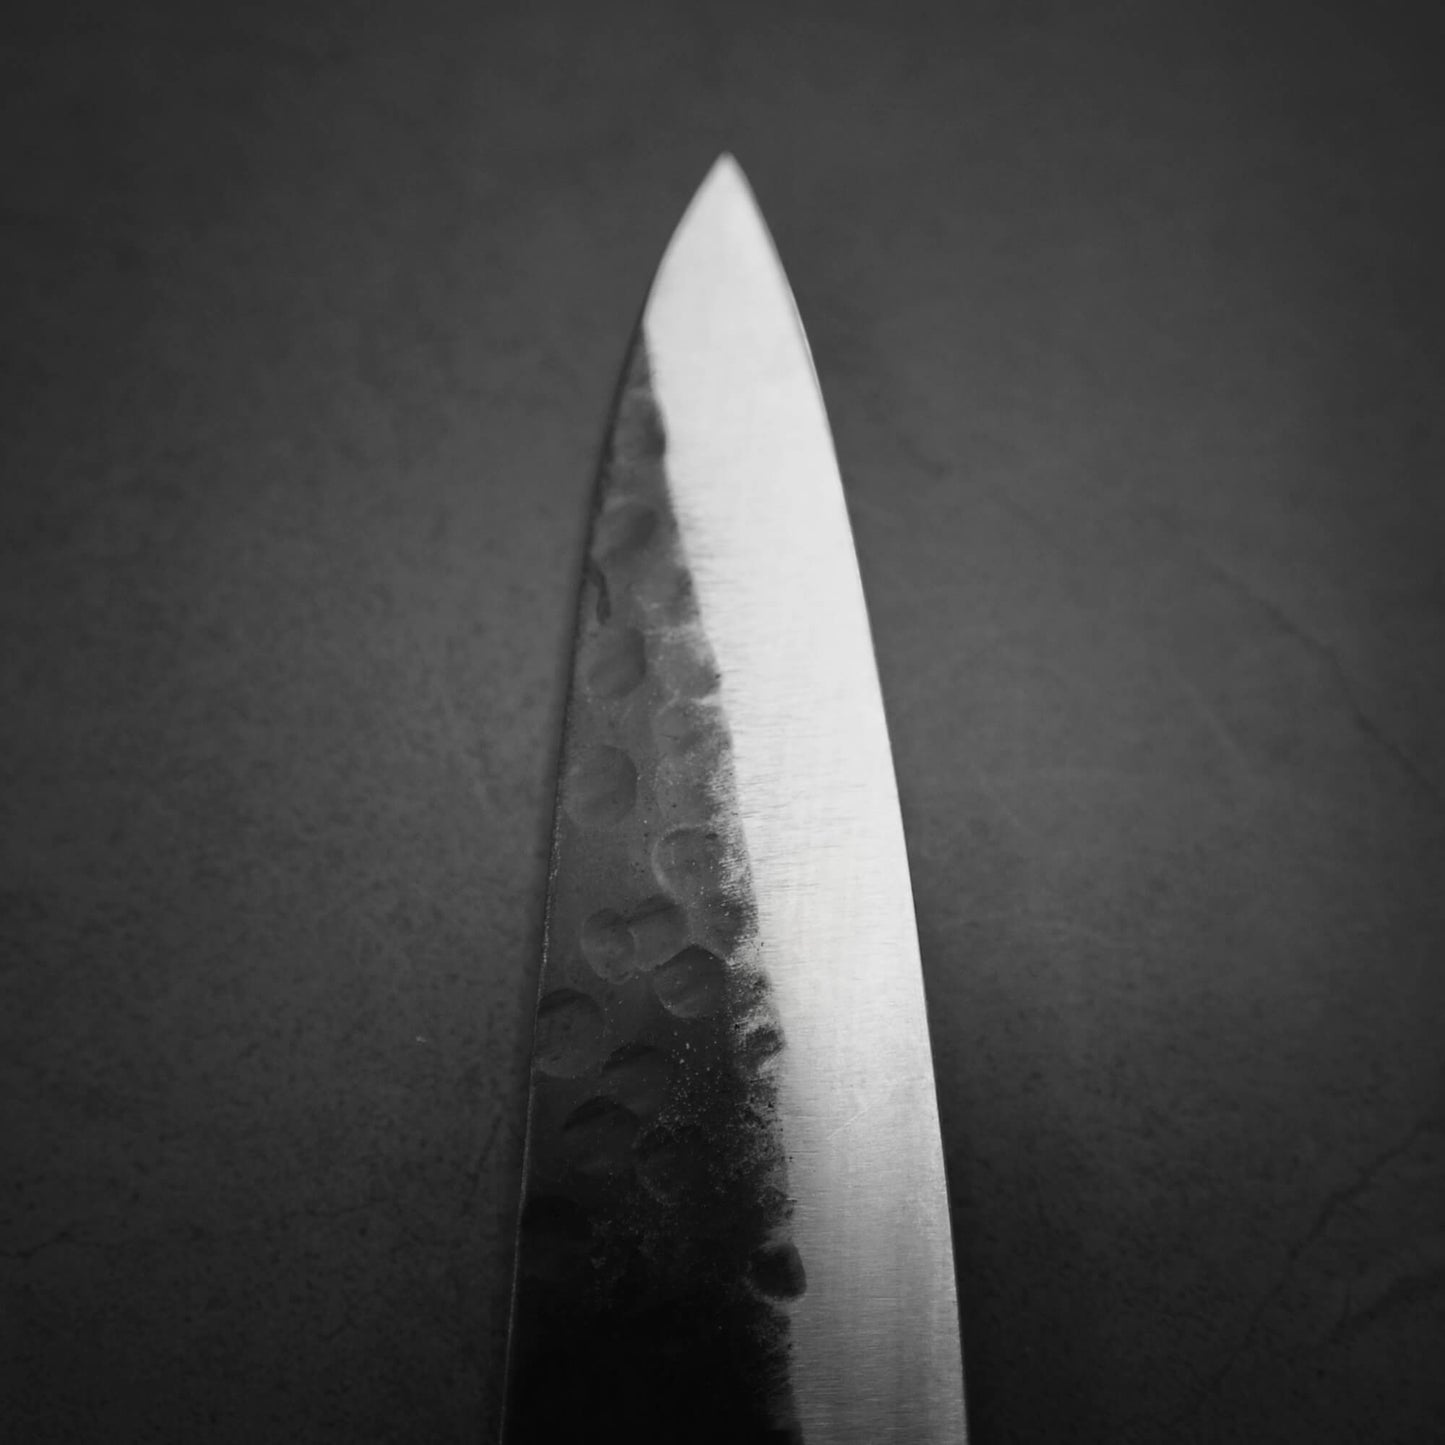 Teruyasu Fujiwara Denka petty knife 150mm